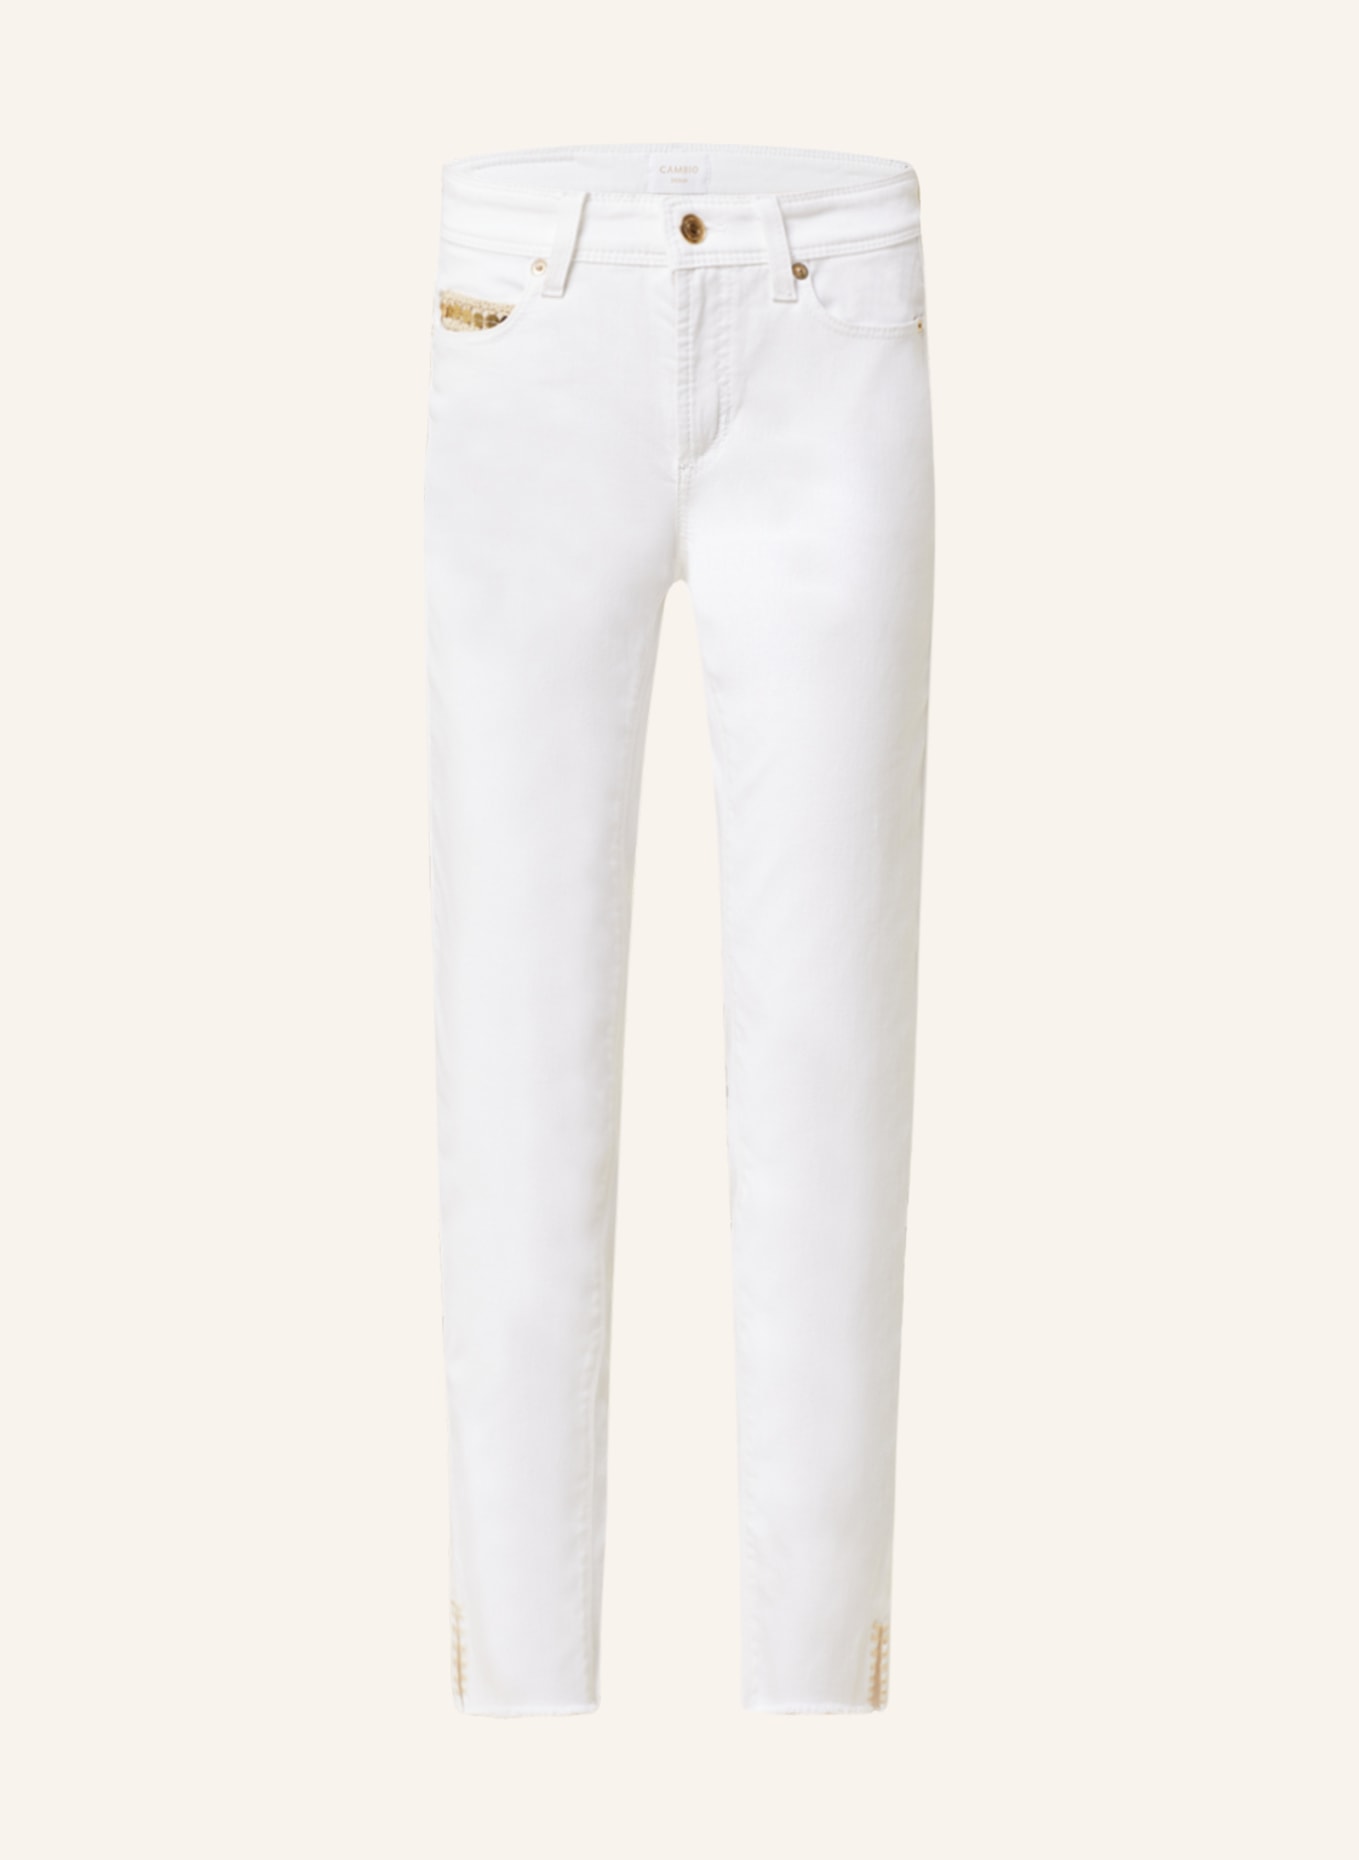 CAMBIO Jeans PIPER, Farbe: 5009 softwash & fringed (Bild 1)